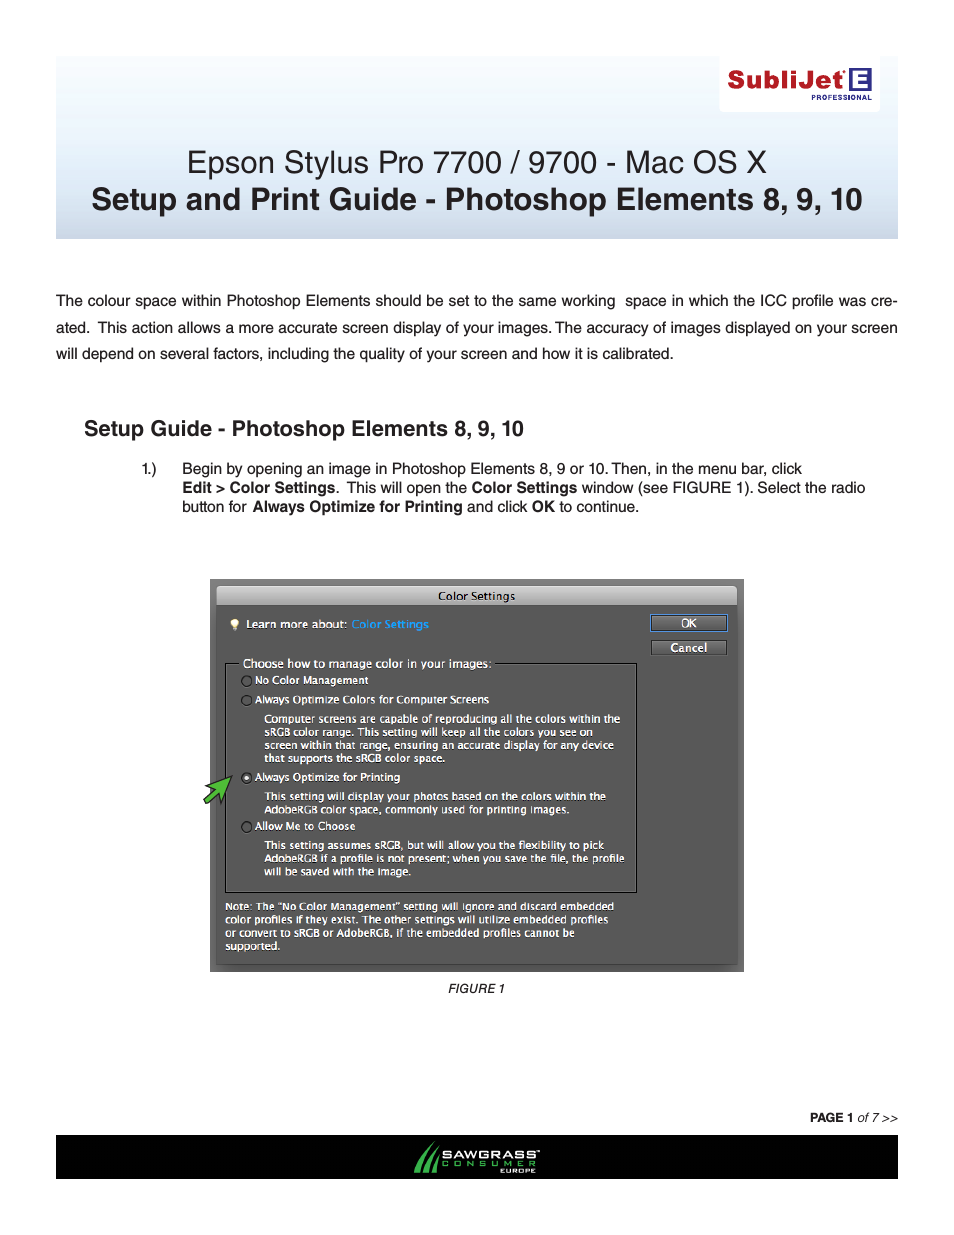 SubliJet E Epson Stylus Pro 7700 (Mac ICC Profile Setup): Print & Setup Guide Photoshop Elements 8 - 10